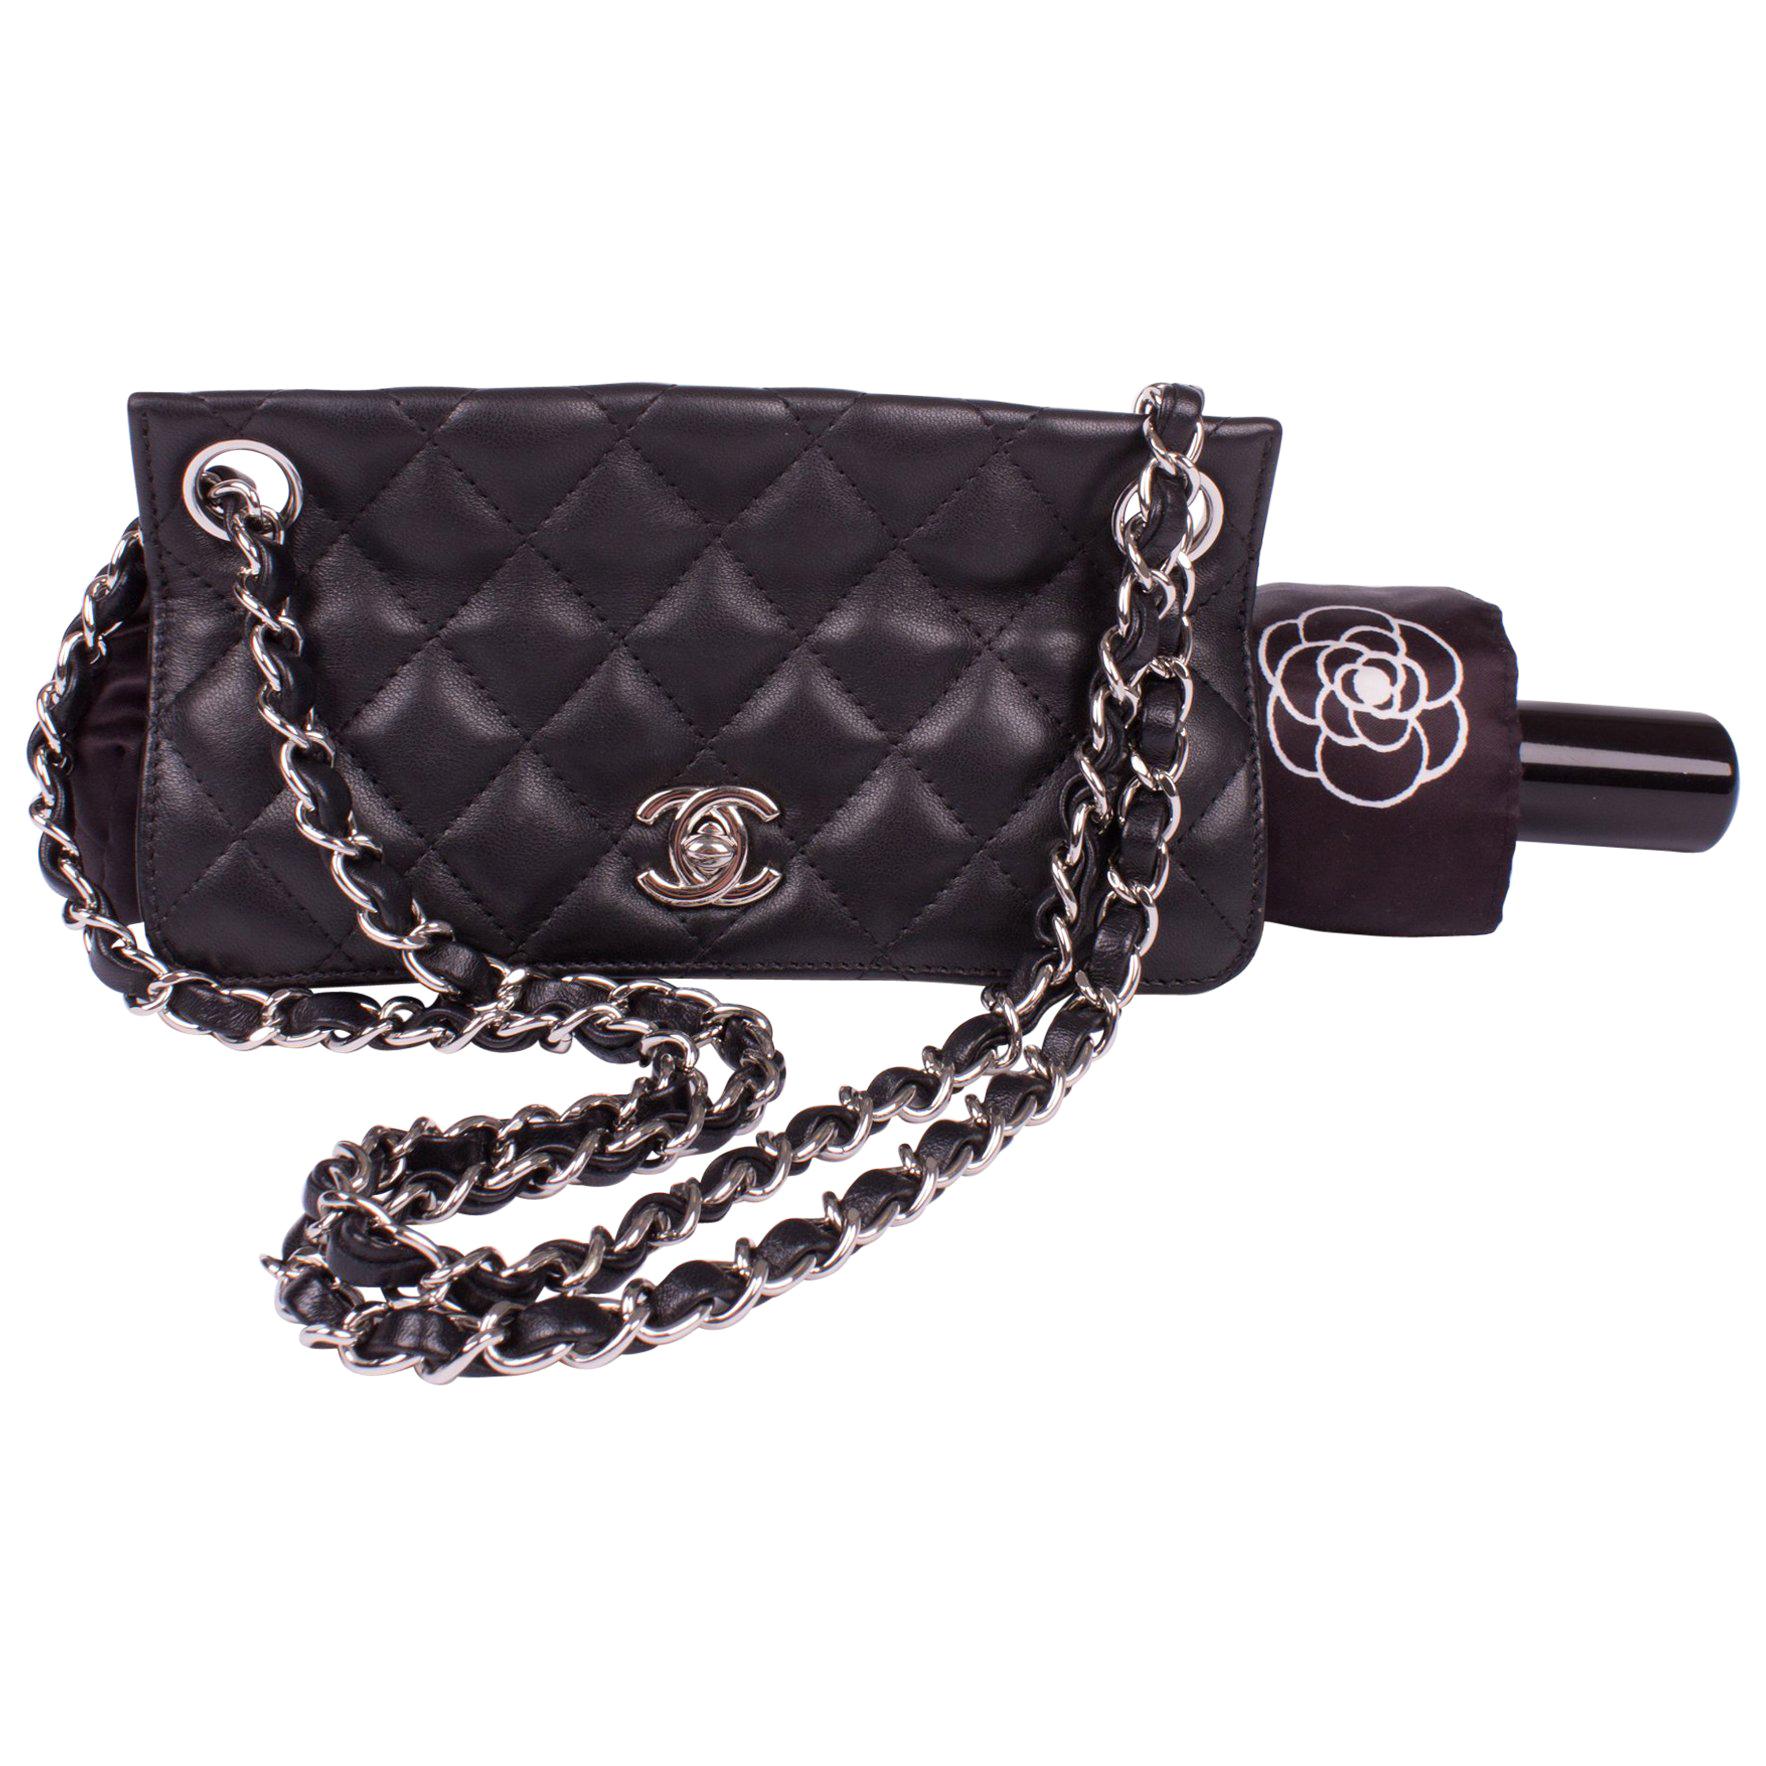 Chanel Umbrella Case Single Flap Bag - black leather